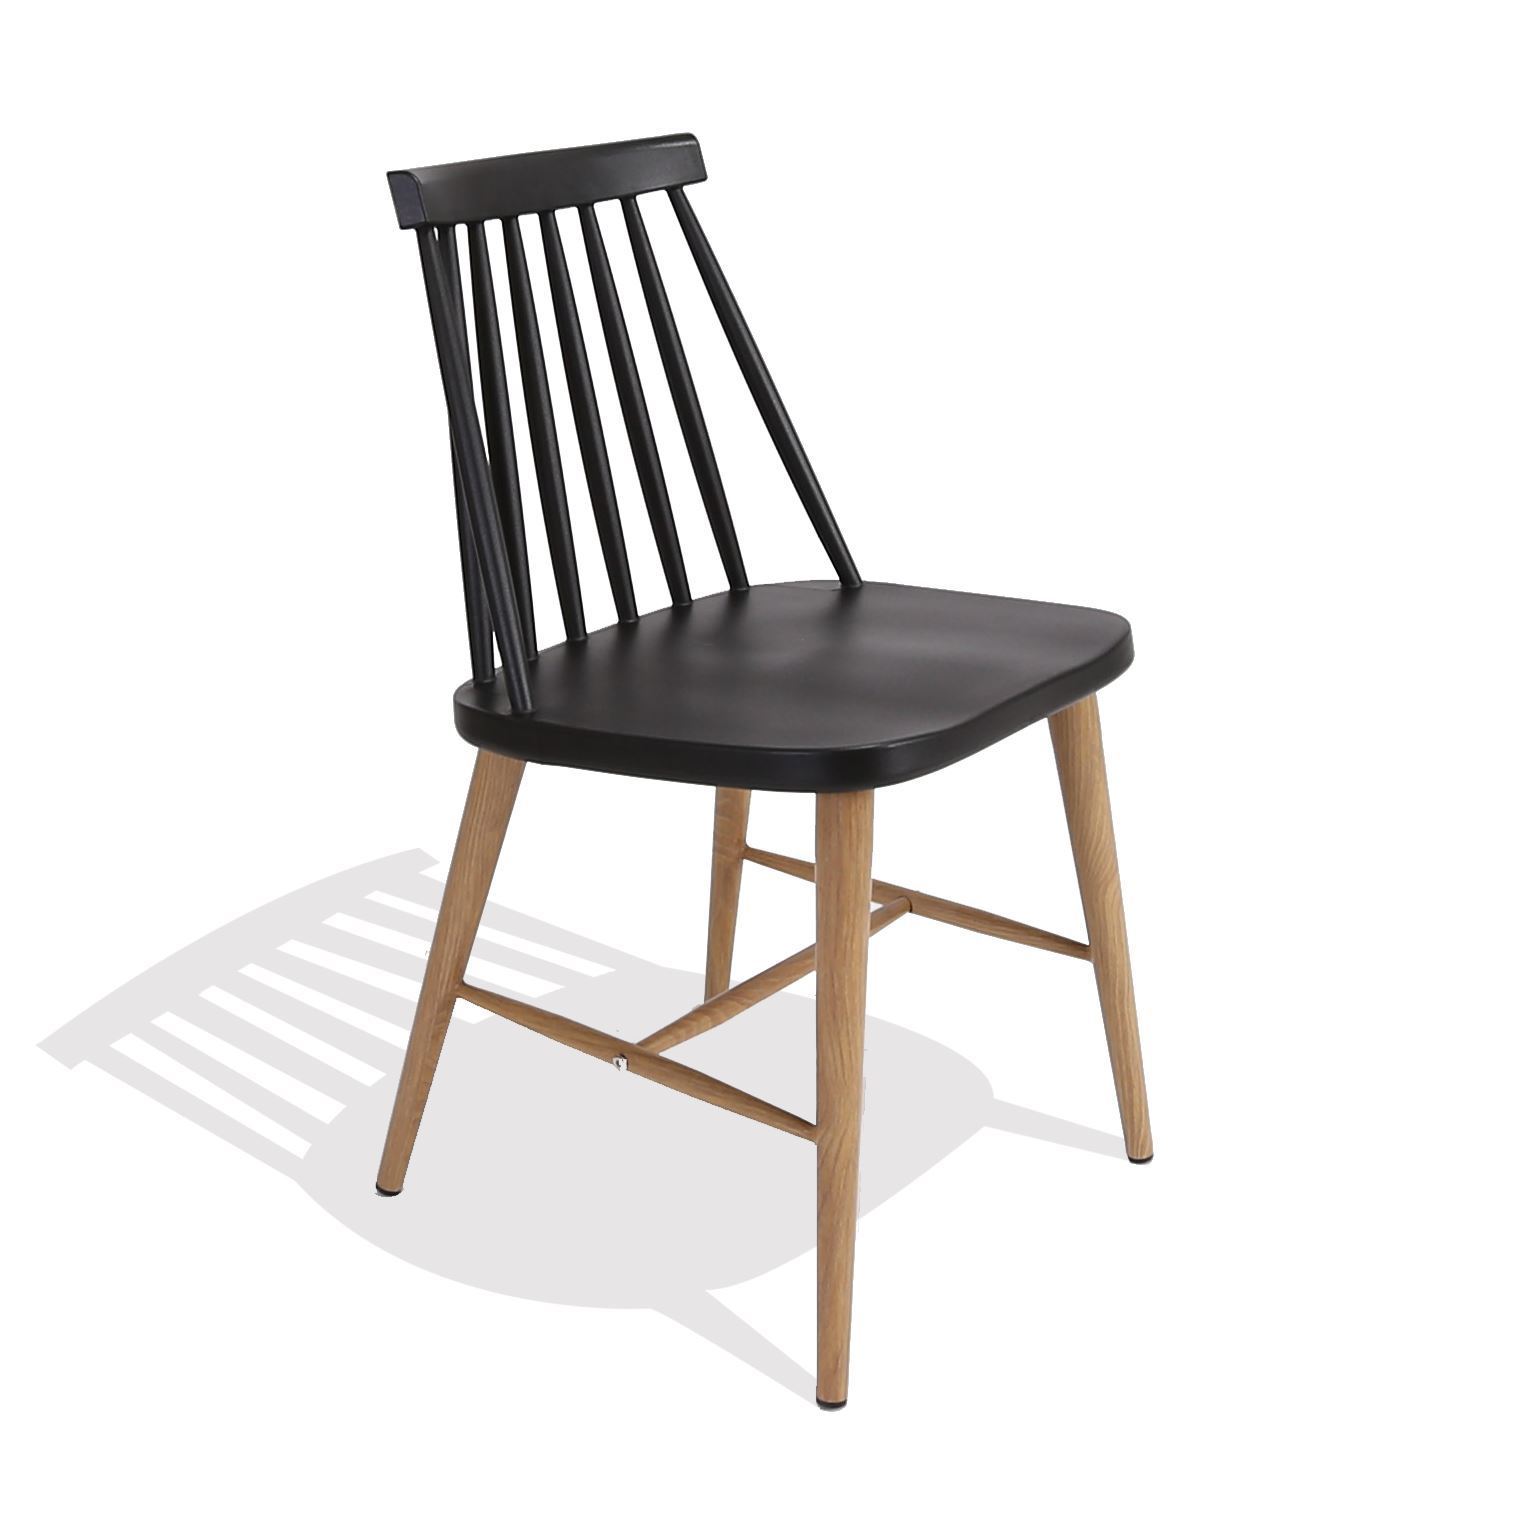 Nordic Chair - Nathan Rhodes Design - Nathan Rhodes Design Co. Ltd.